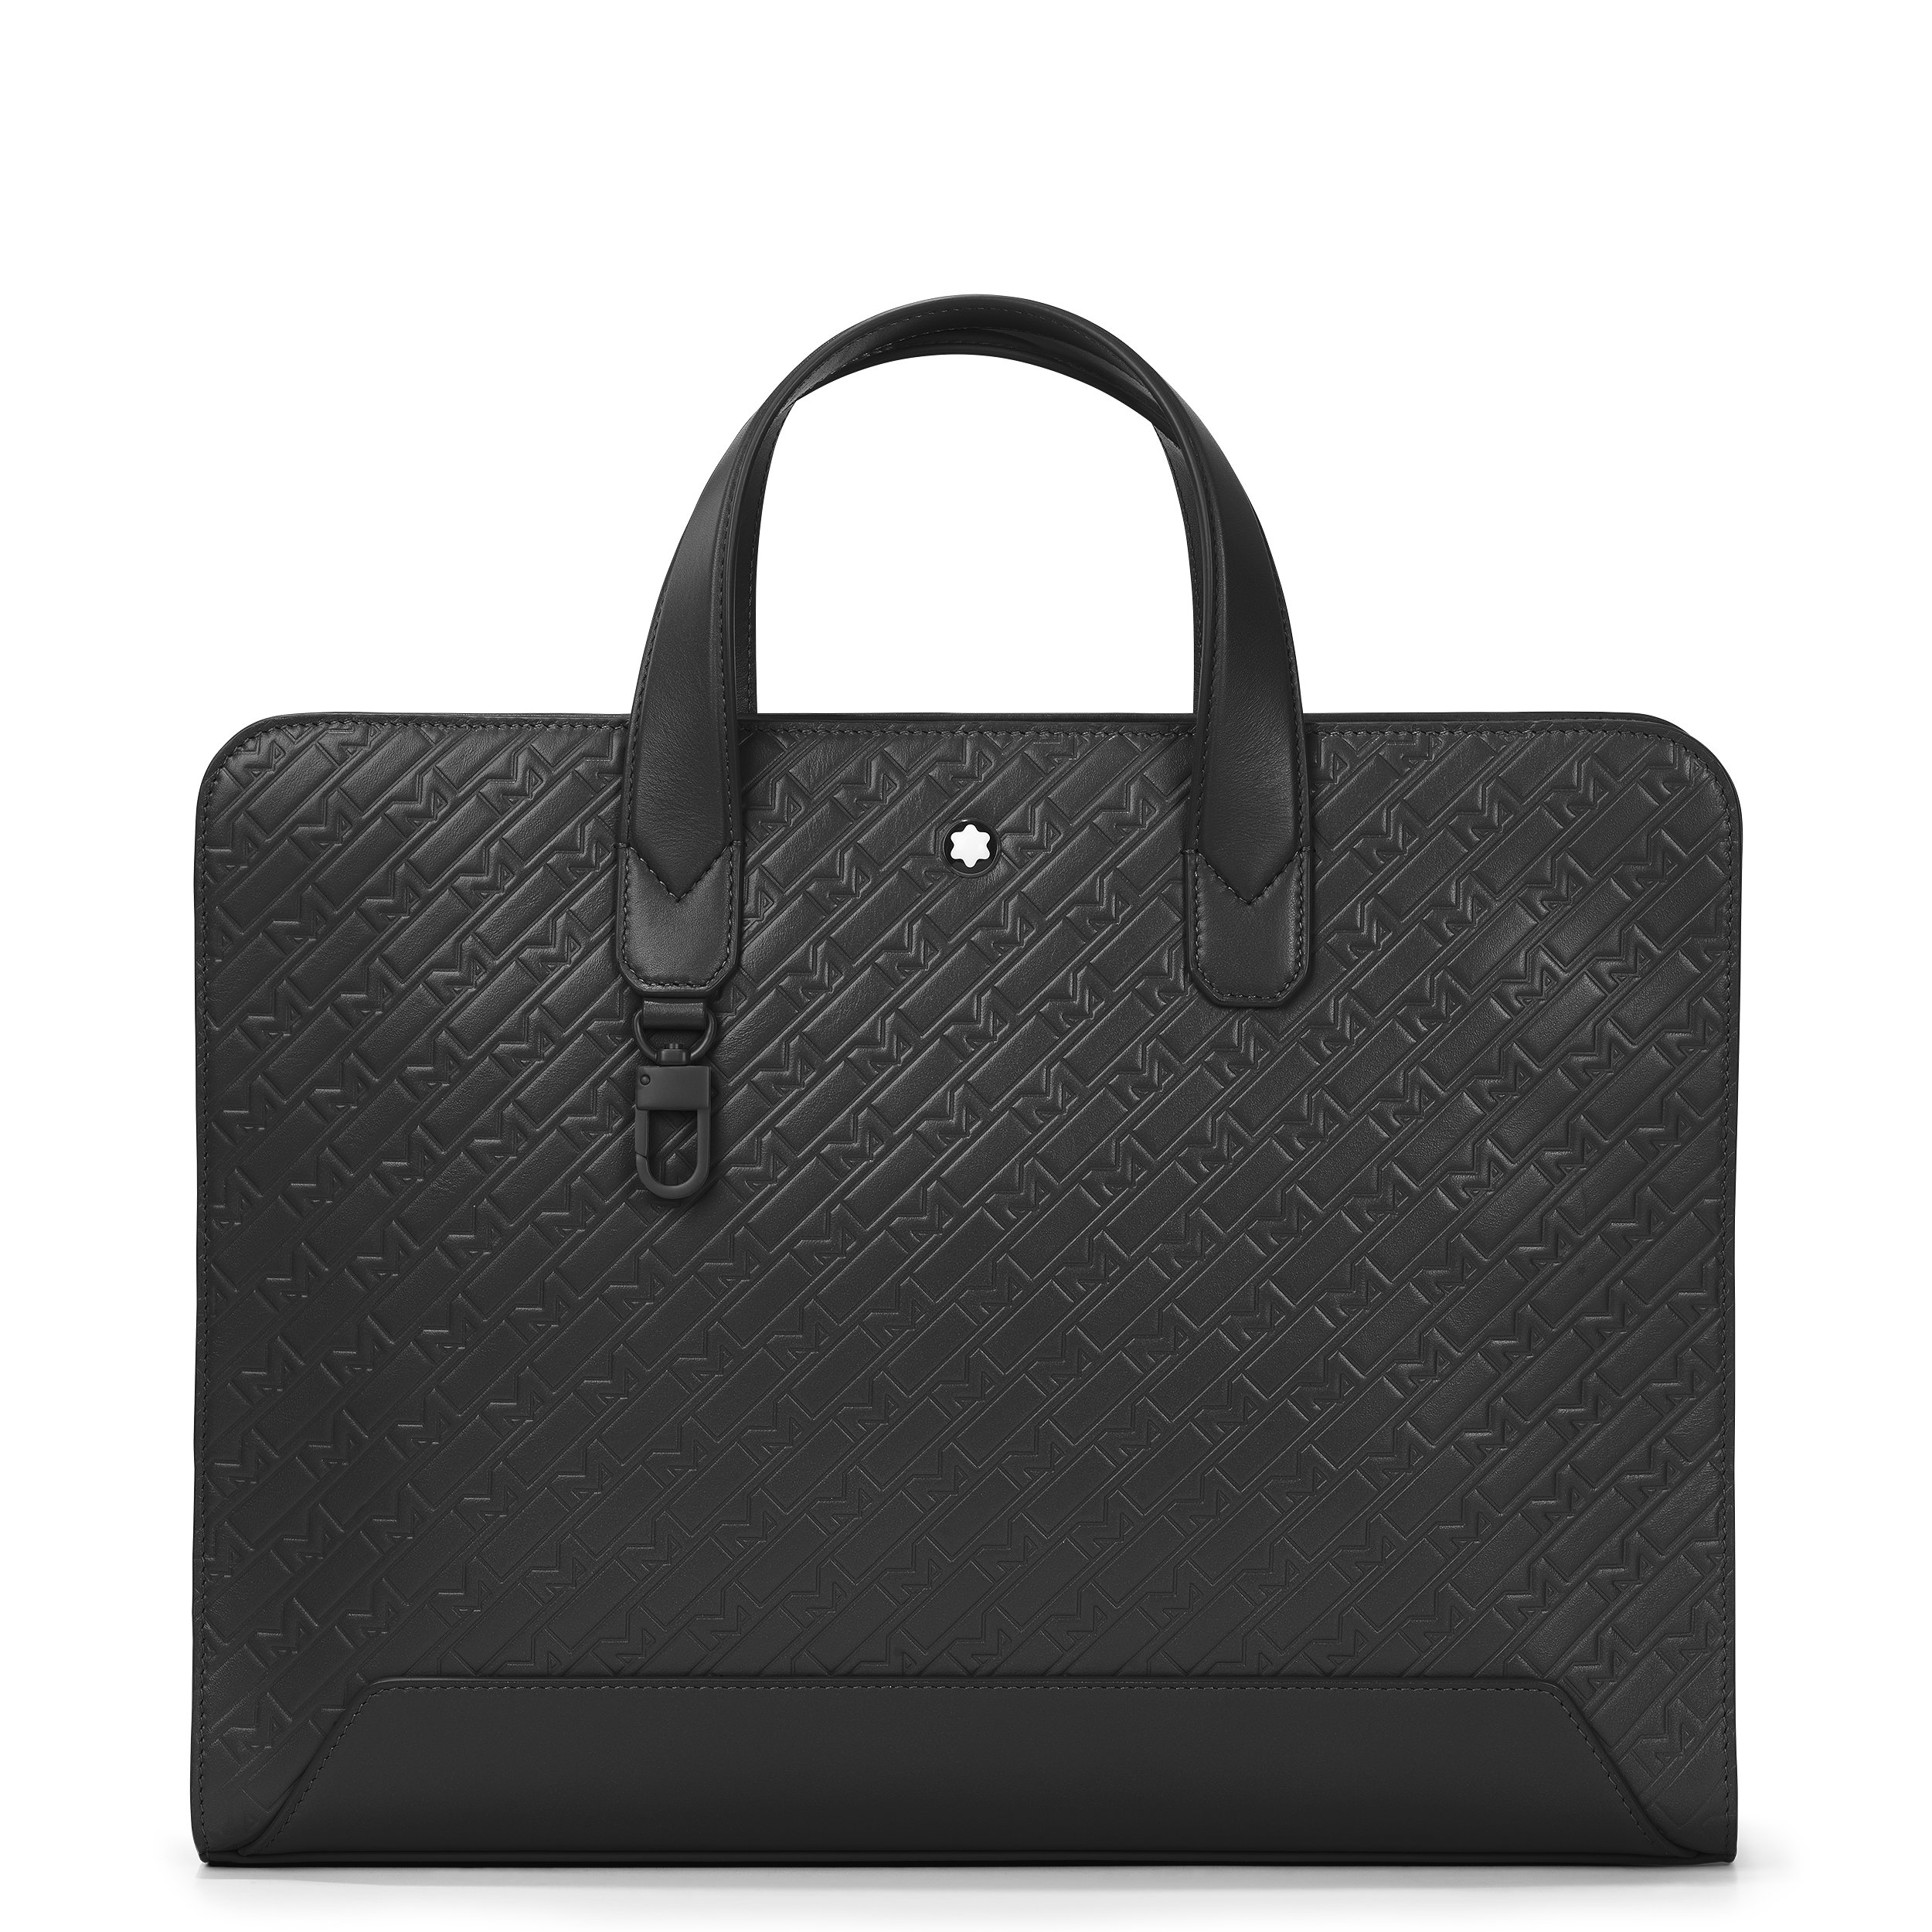 New Louis Vuitton Limited Edition Shanghai Pencil Pouch Bag at 1stDibs  louis  vuitton pencil case, lv pencil case, louis vuitton pencil holder